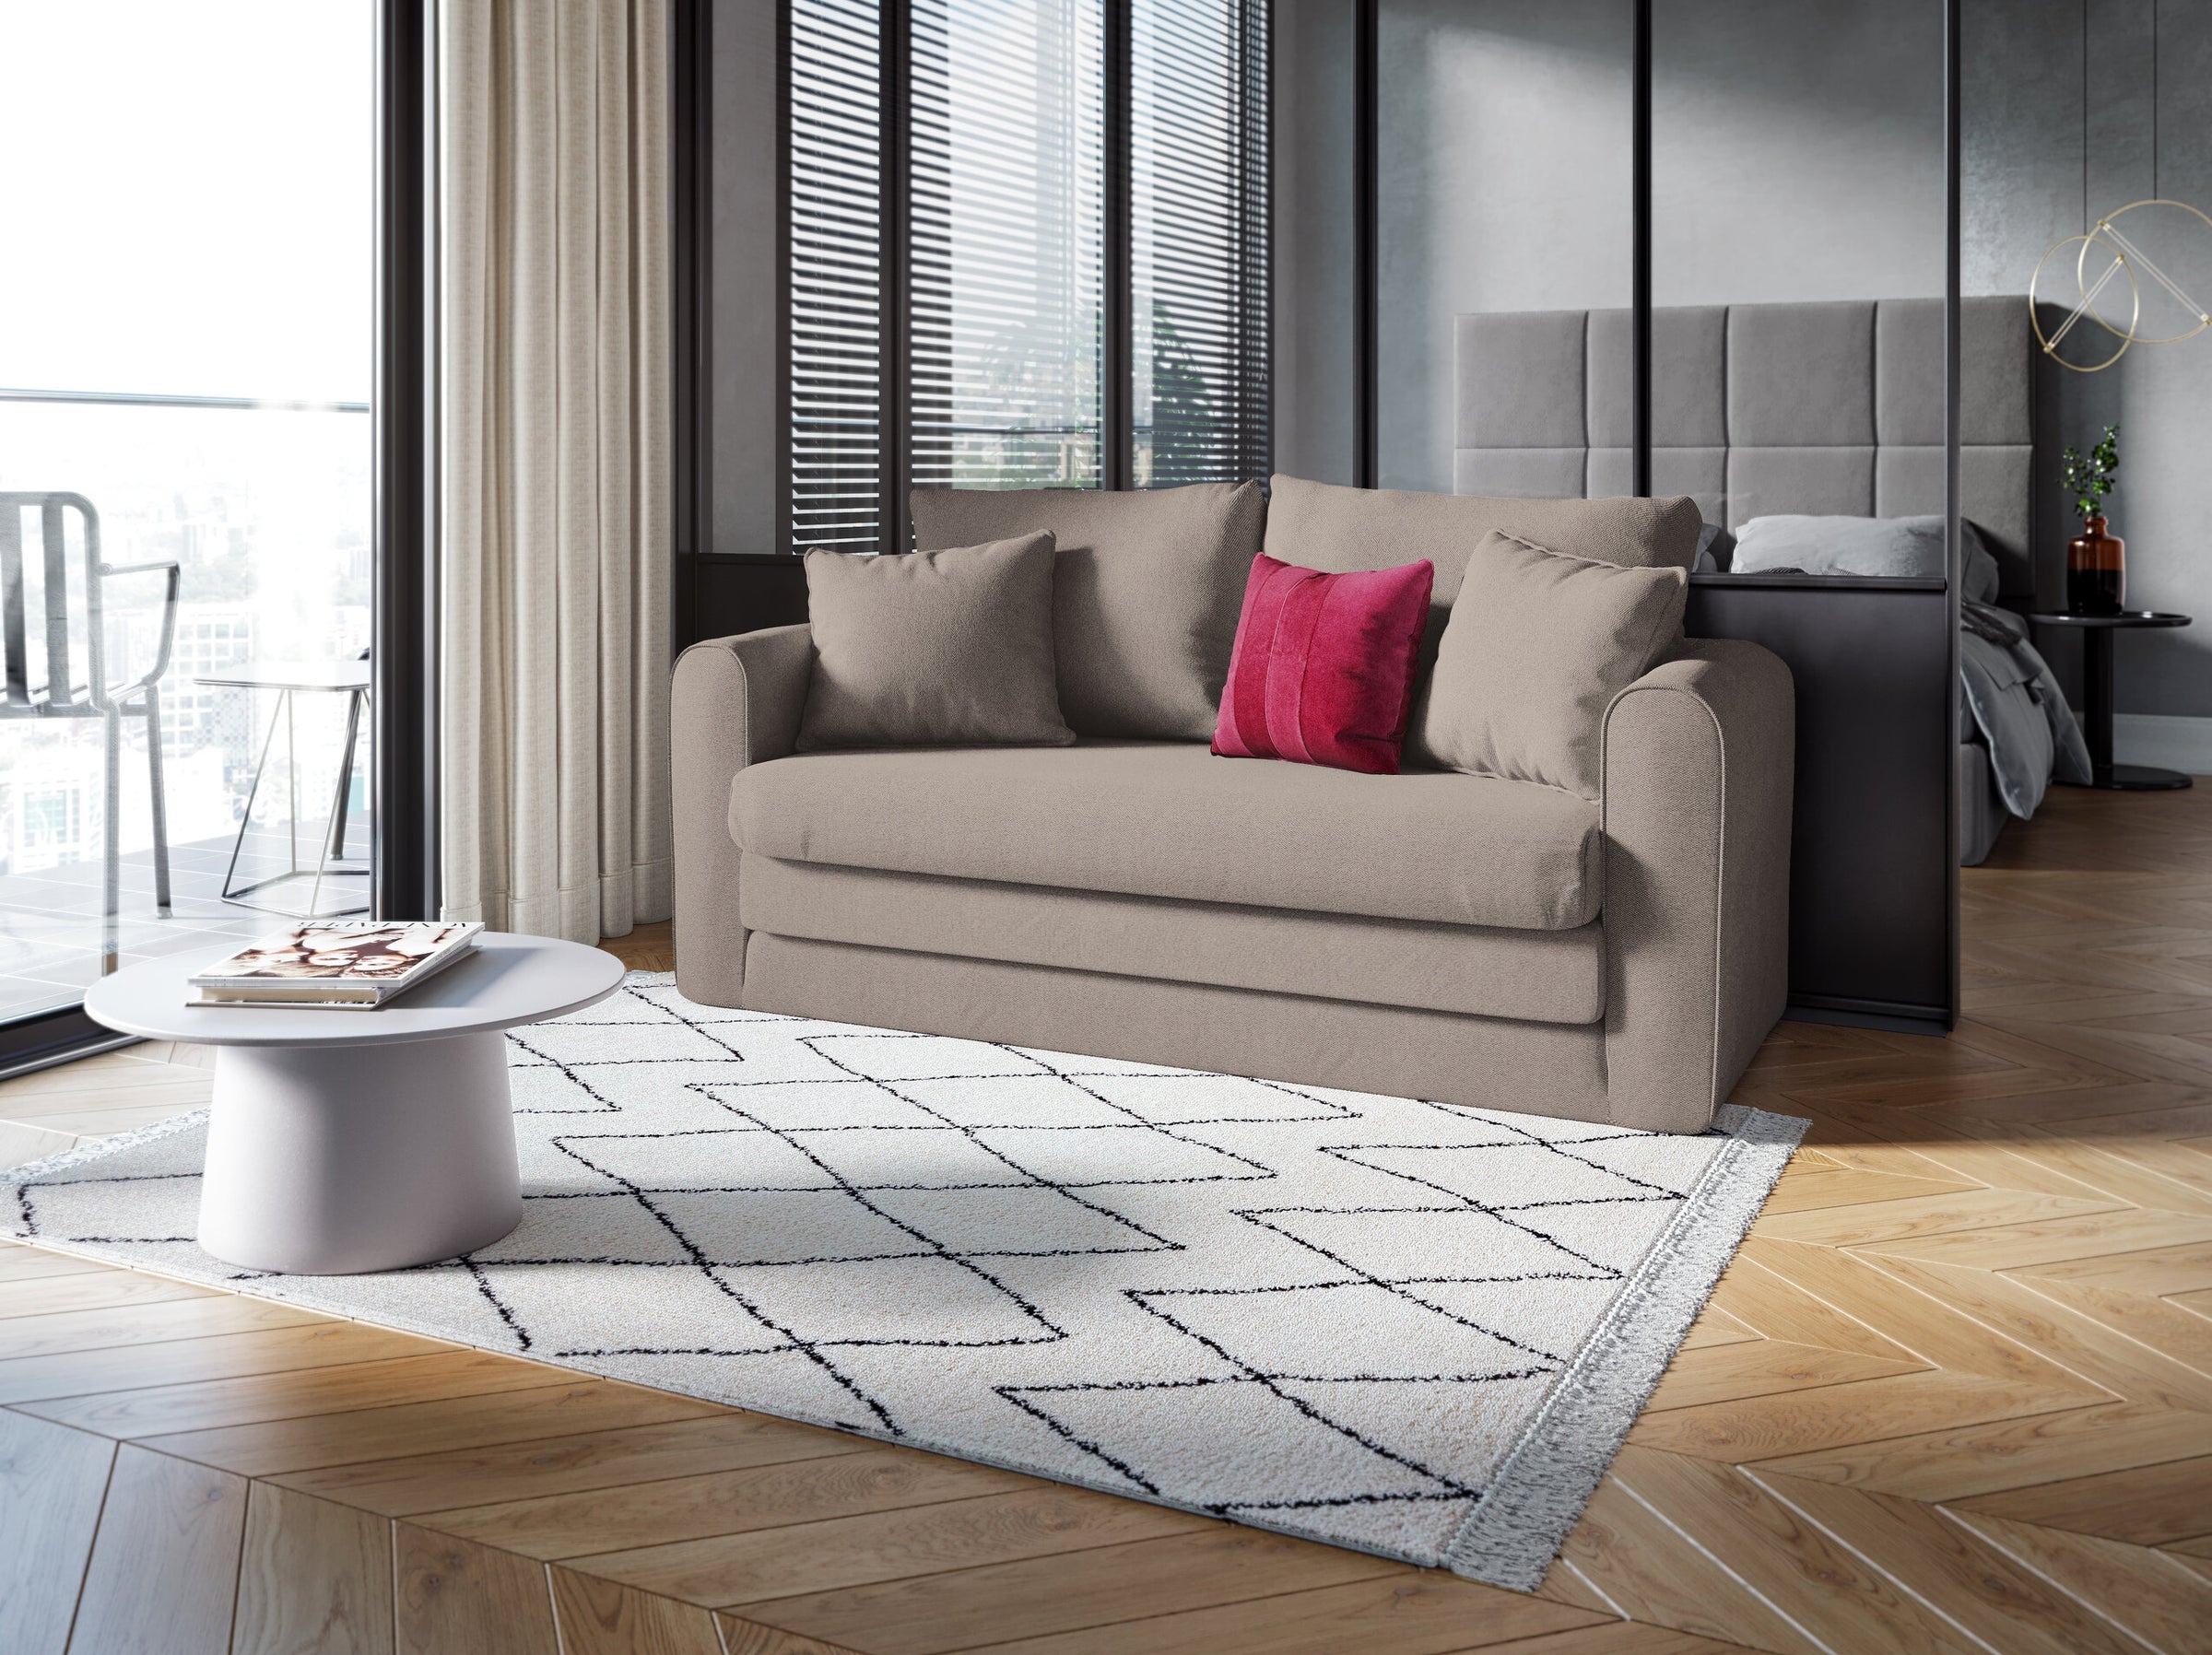 Lido sofas structured fabric beige